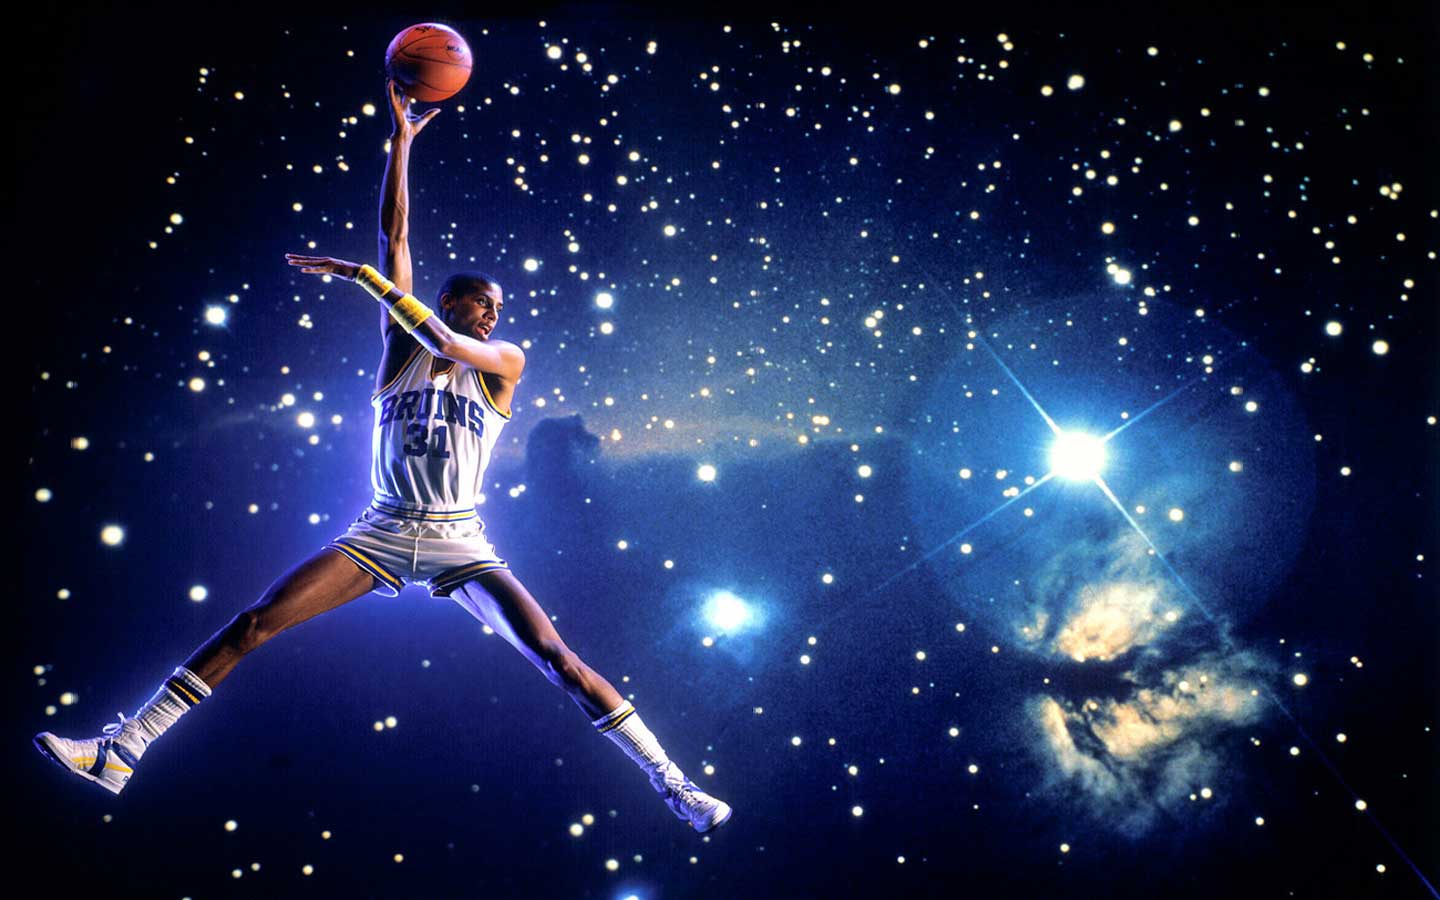 Reggie Miller Basketball wallpapers NBA Wallpapers